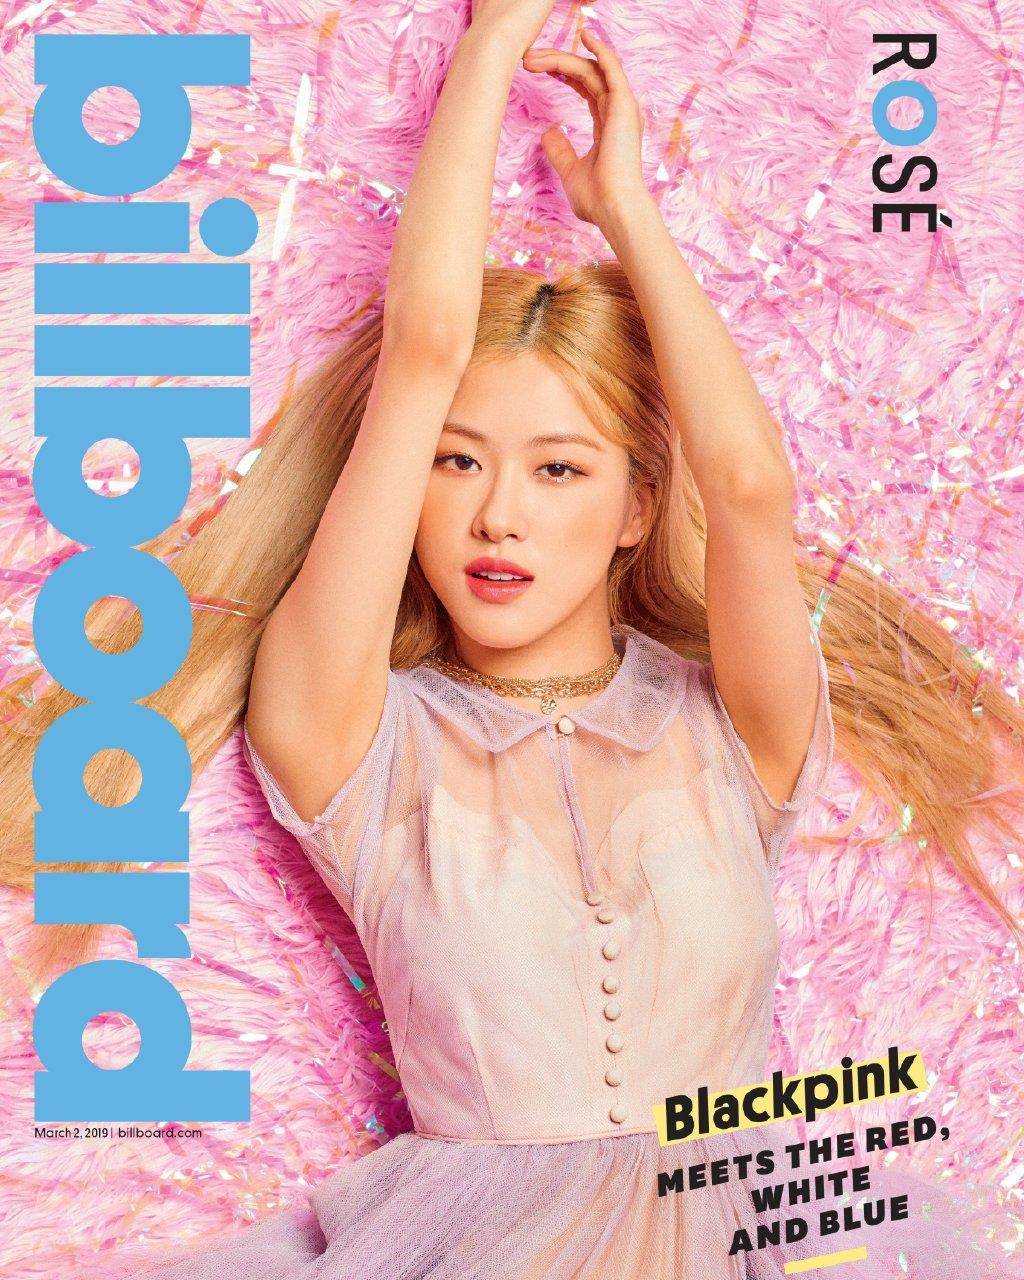 blackpink朴彩英即将solo,销量是南韩女团偶像四代主唱第一